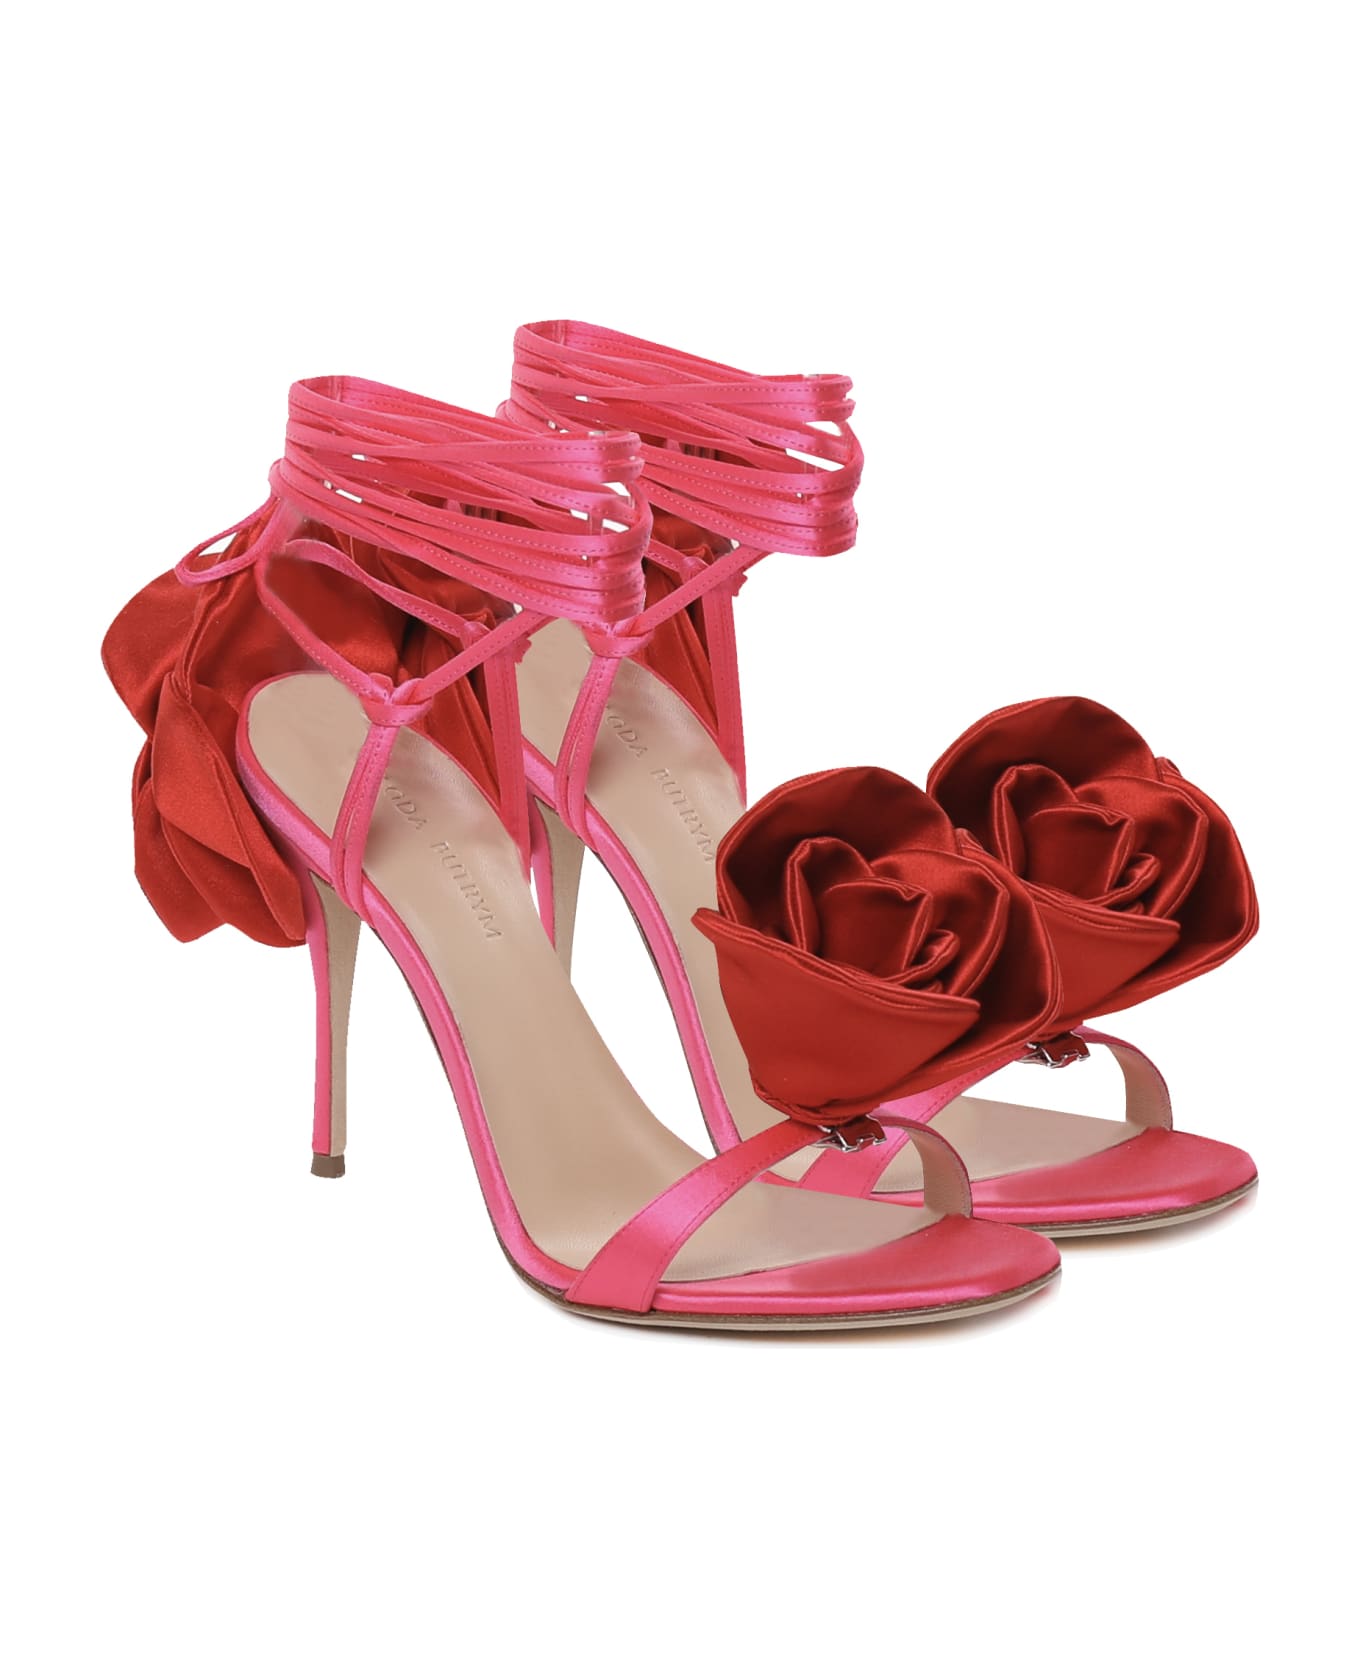 Magda Butrym Double Red Flower Heel Sandals In Fuchsia Satin - Pink